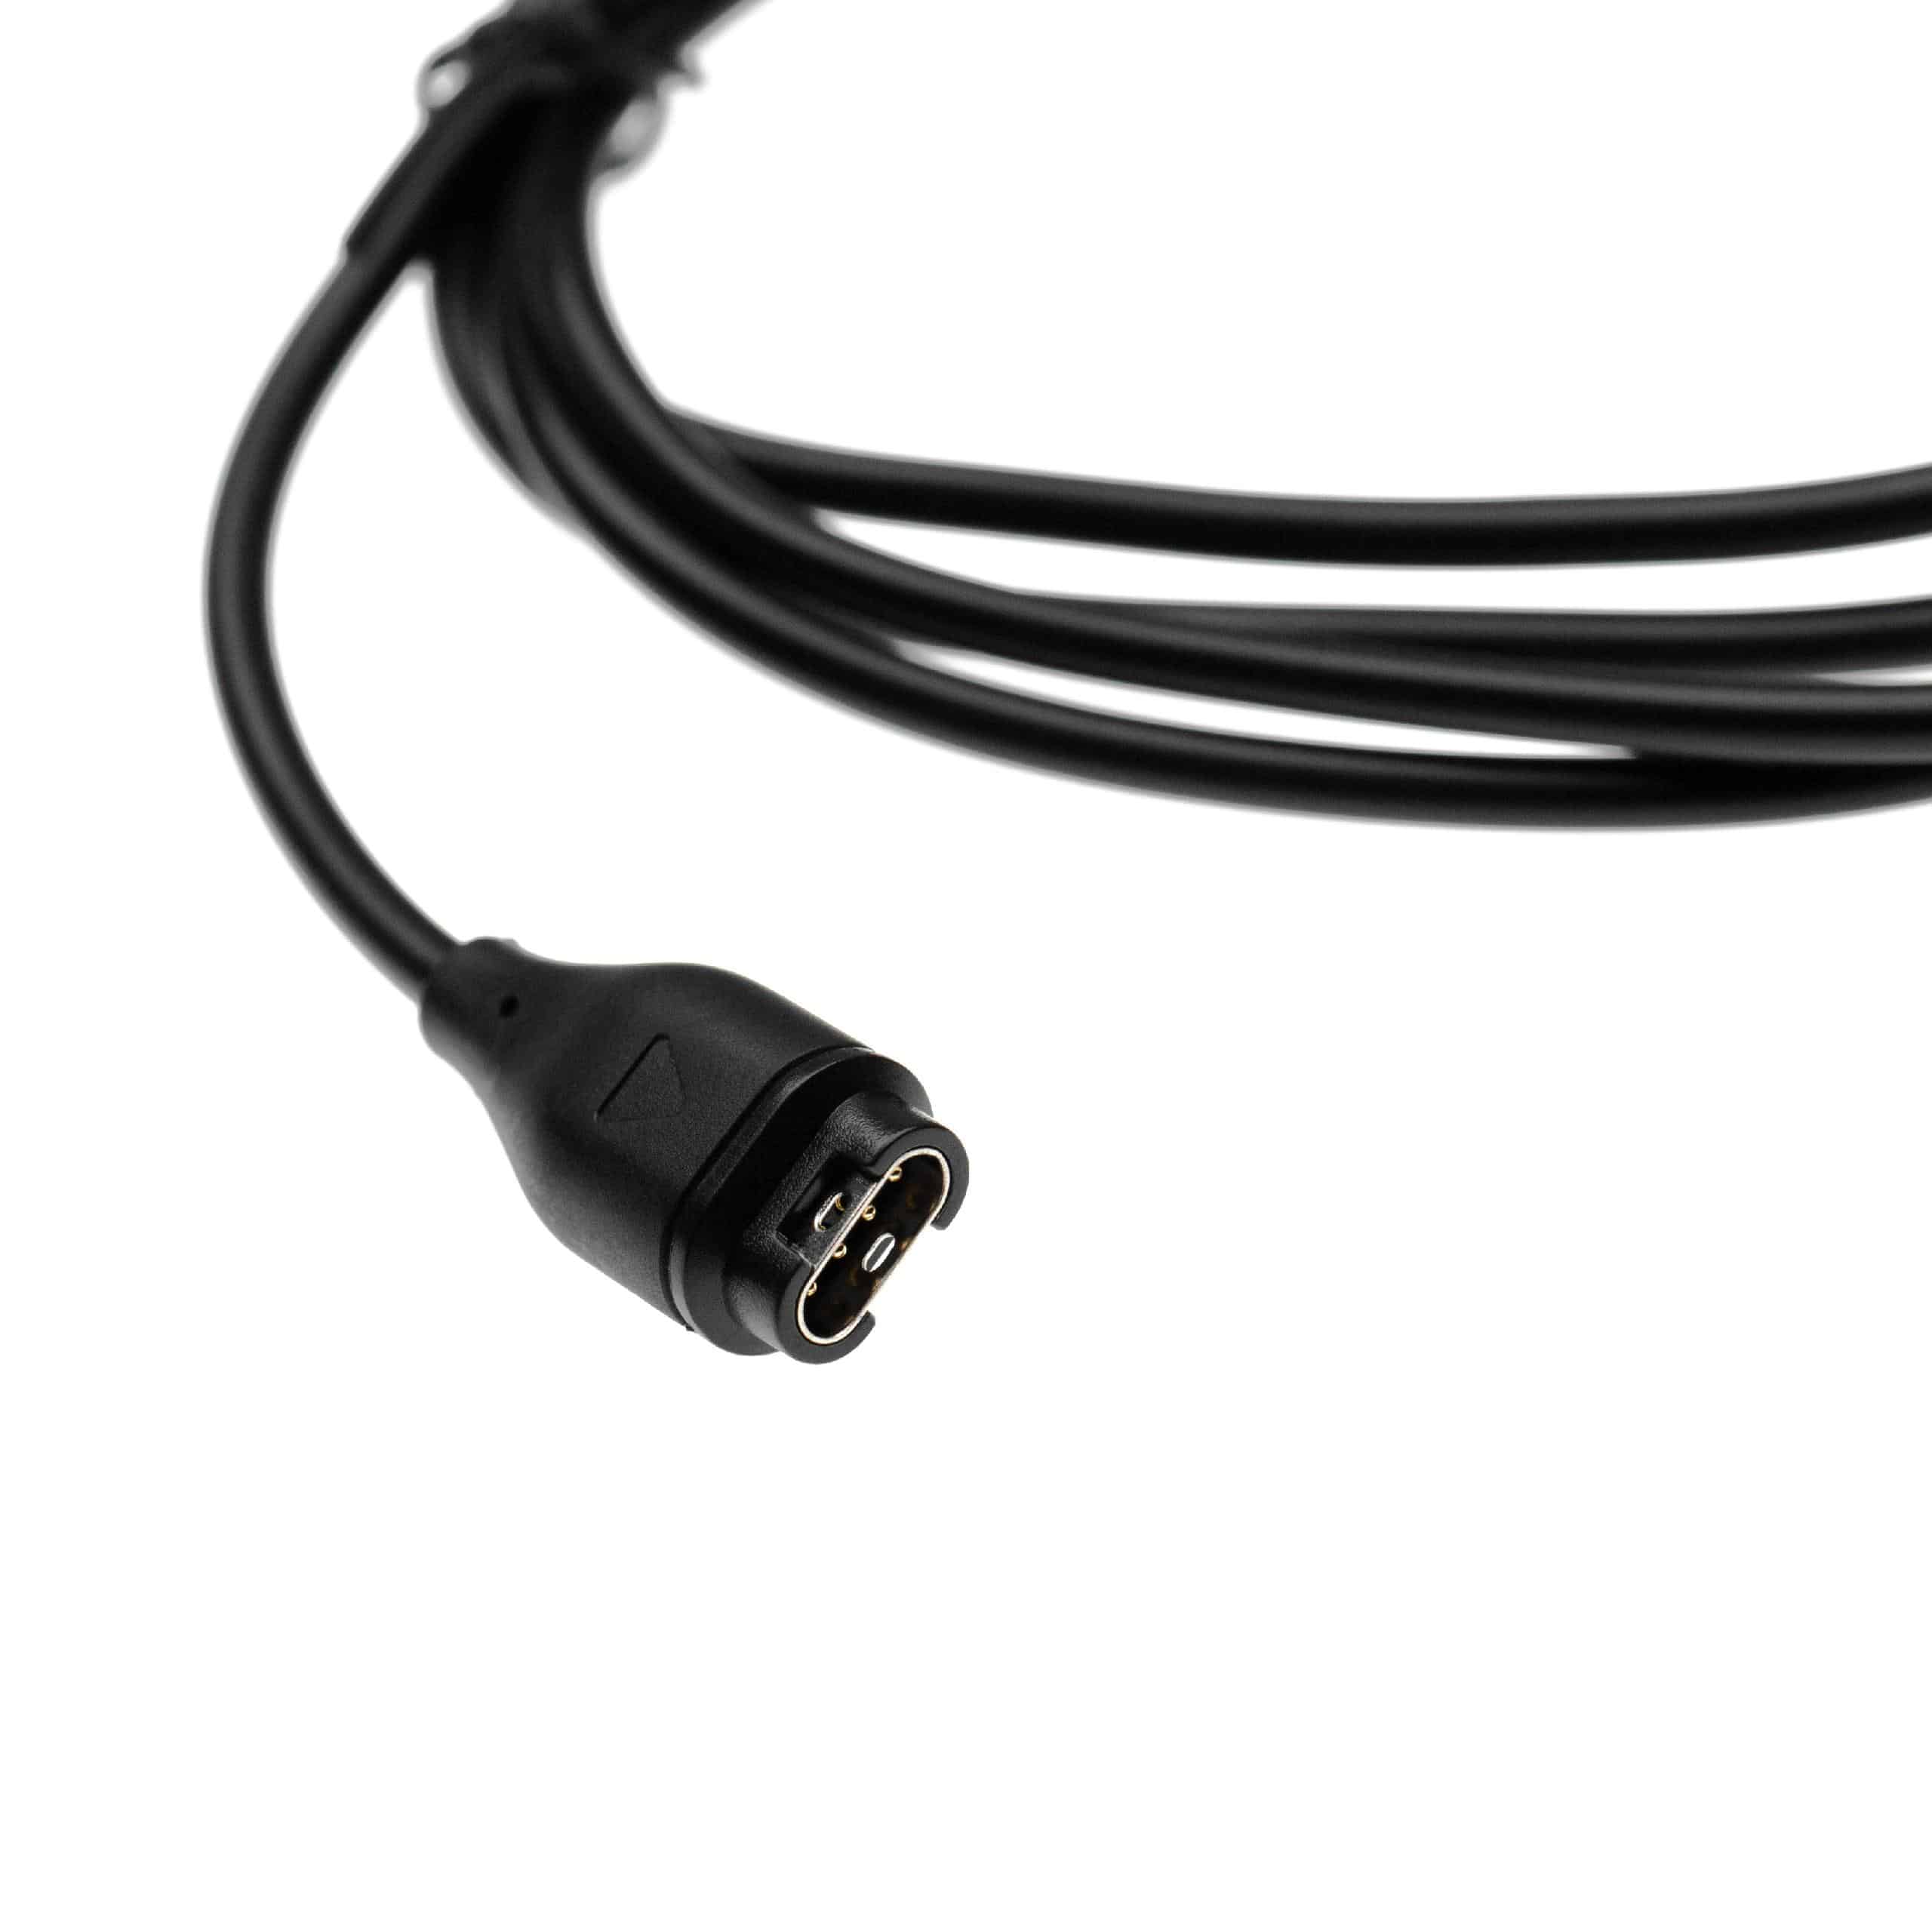 Cable de carga USB para smartwatch - negro 100 cm